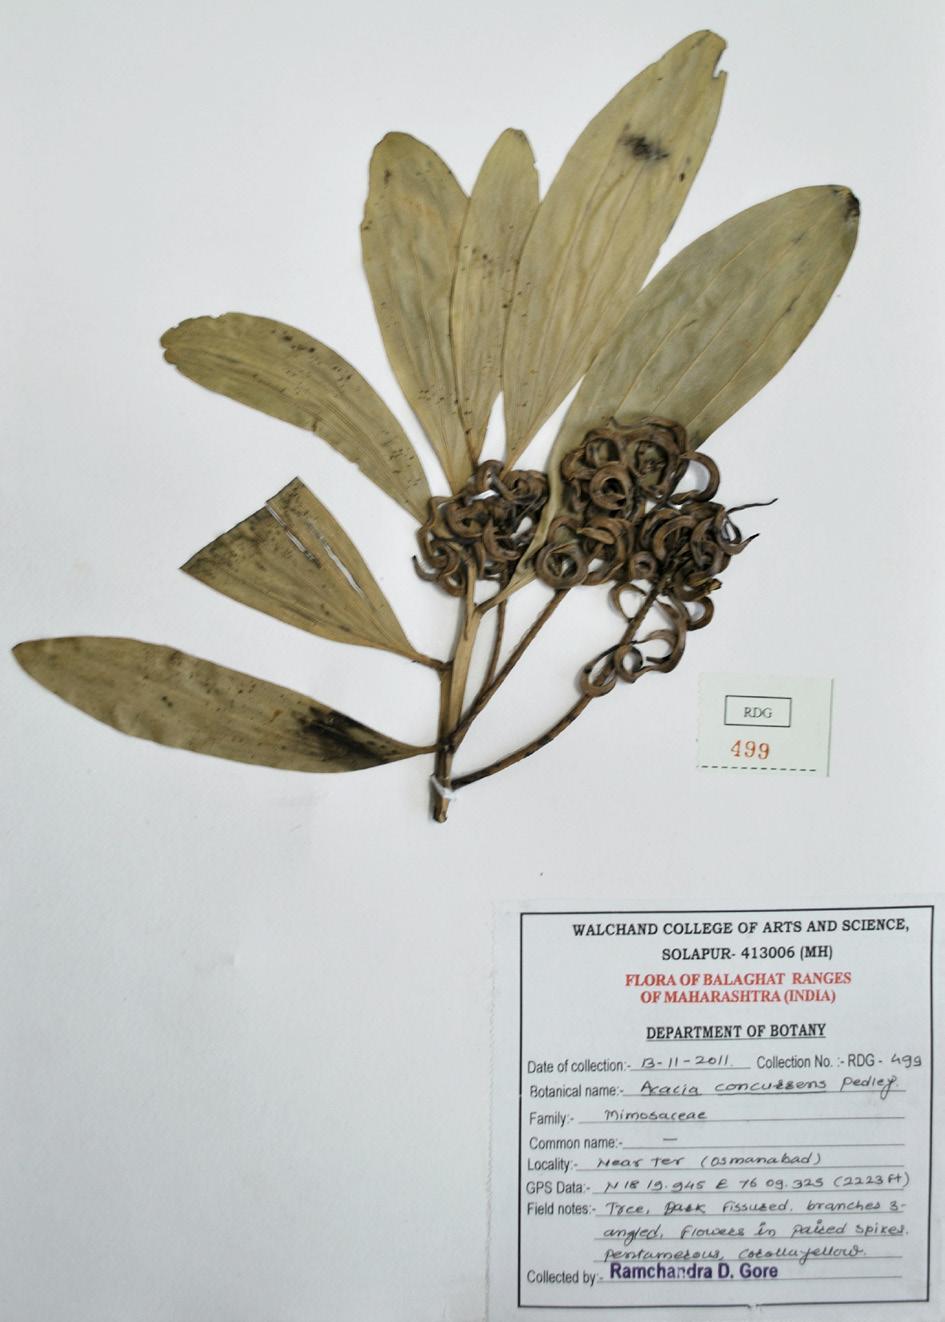 Image 2. Herbarium of Acacia concurrens Pedley. Image 3. Acacia horrida (L.) Willd R.D. Gore Flowering and Fruiting: November February Localities: Ter-Dhoki (18 0 19 56.70 E & 76 0 9 19.